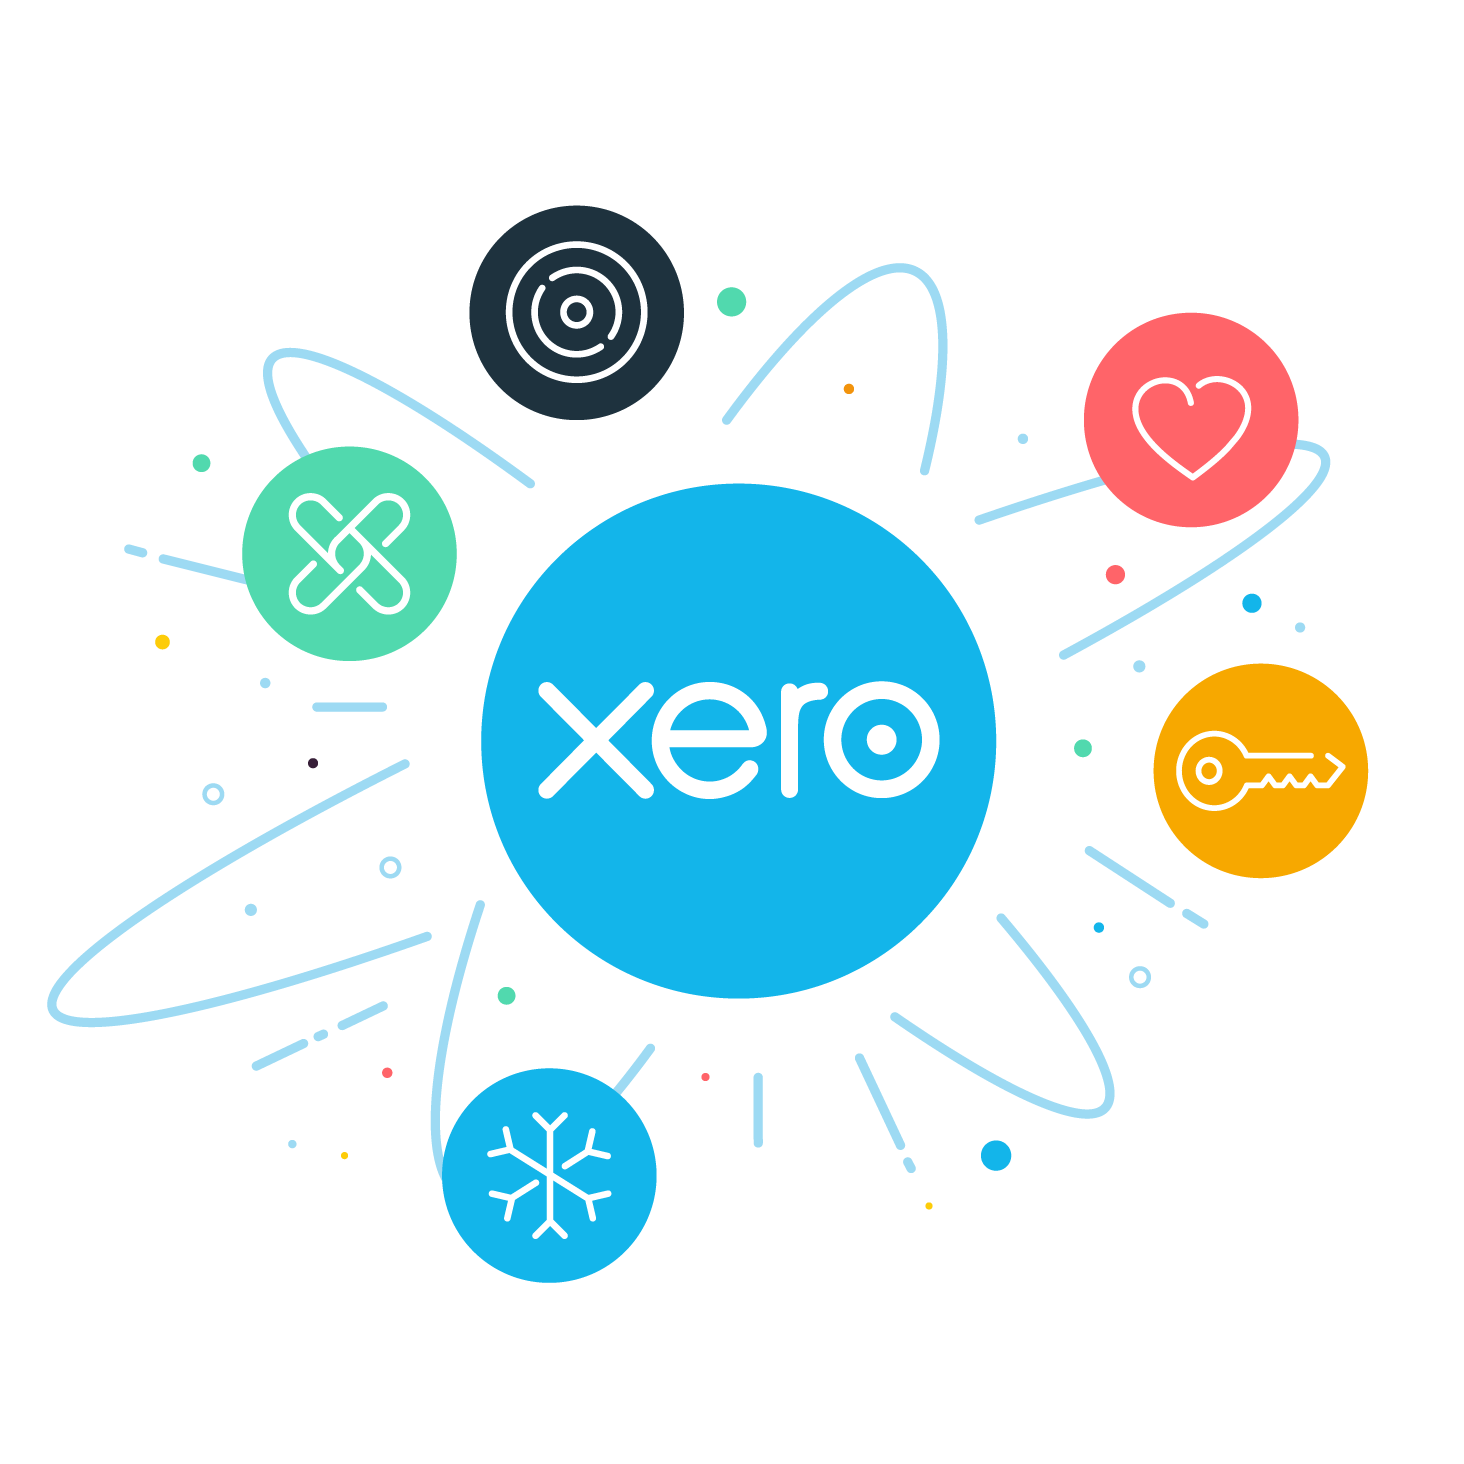 Five icons representing the five Xero values revolve around the Xero logo.